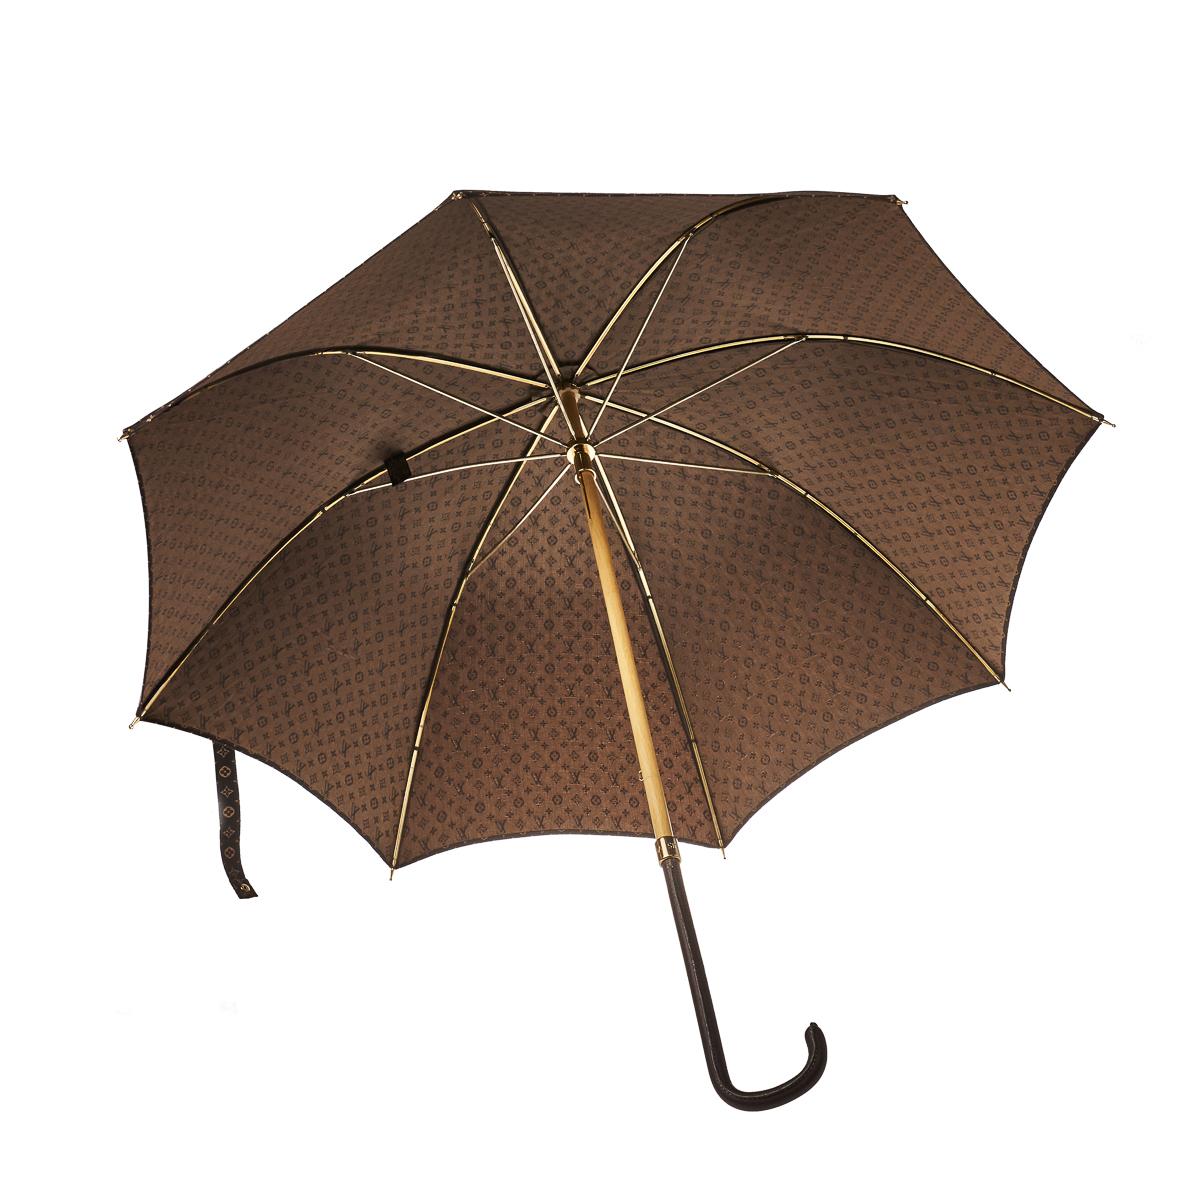 Sold at Auction: Louis Vuitton Umbrella (new w/box)